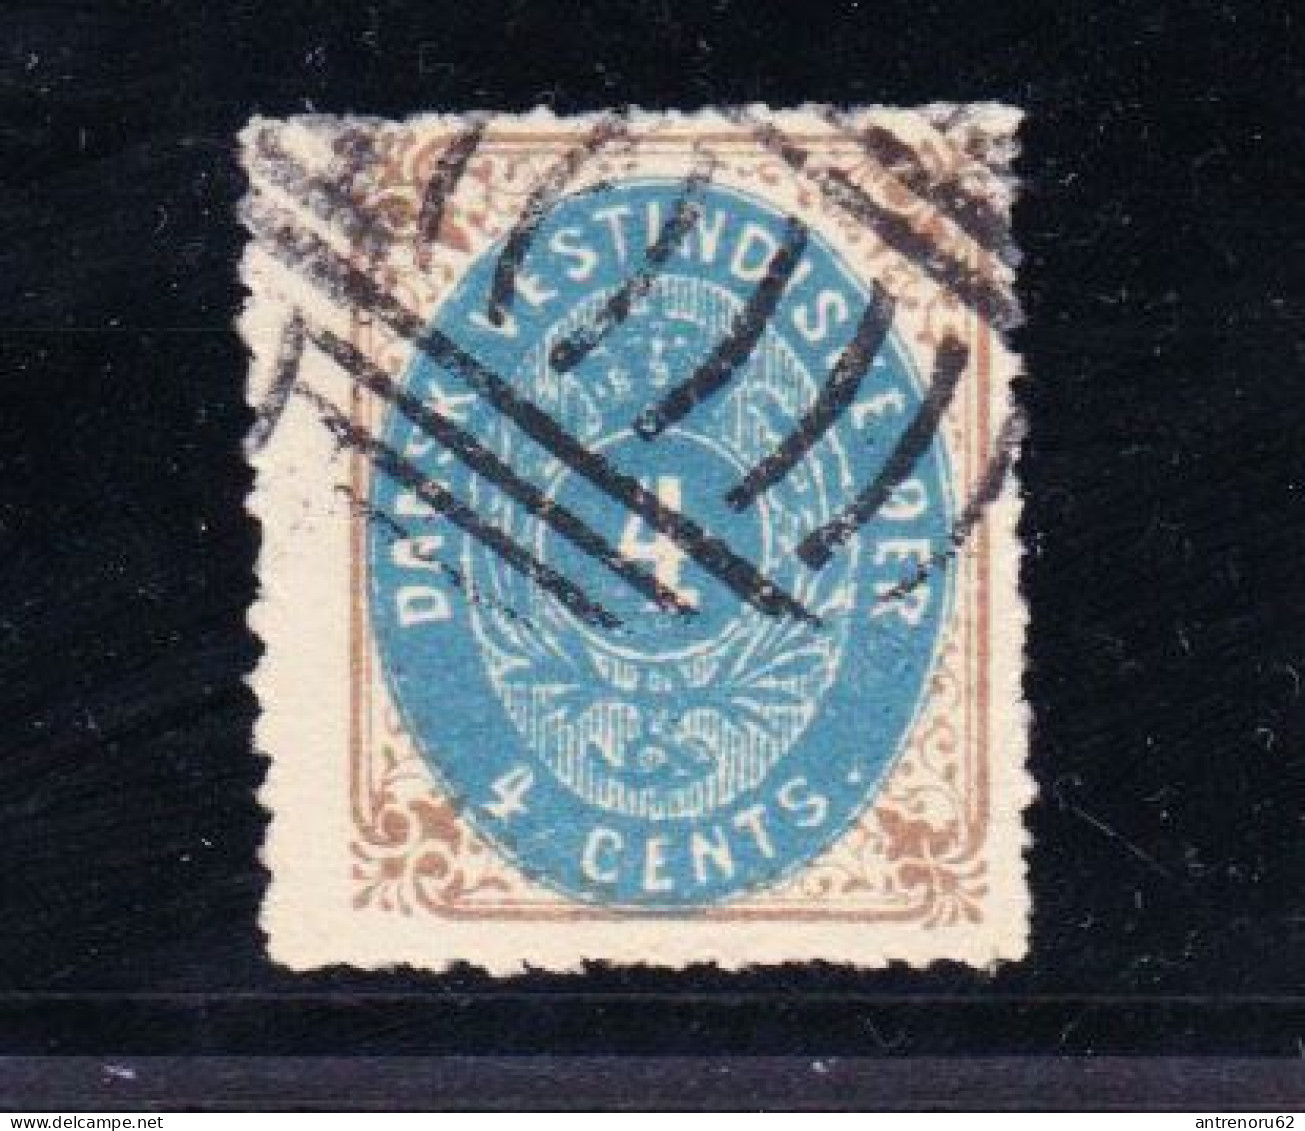 STAMPS-DENMARK-WEST-INDIES-1873-USED-SEE-SCAN - Danimarca (Antille)